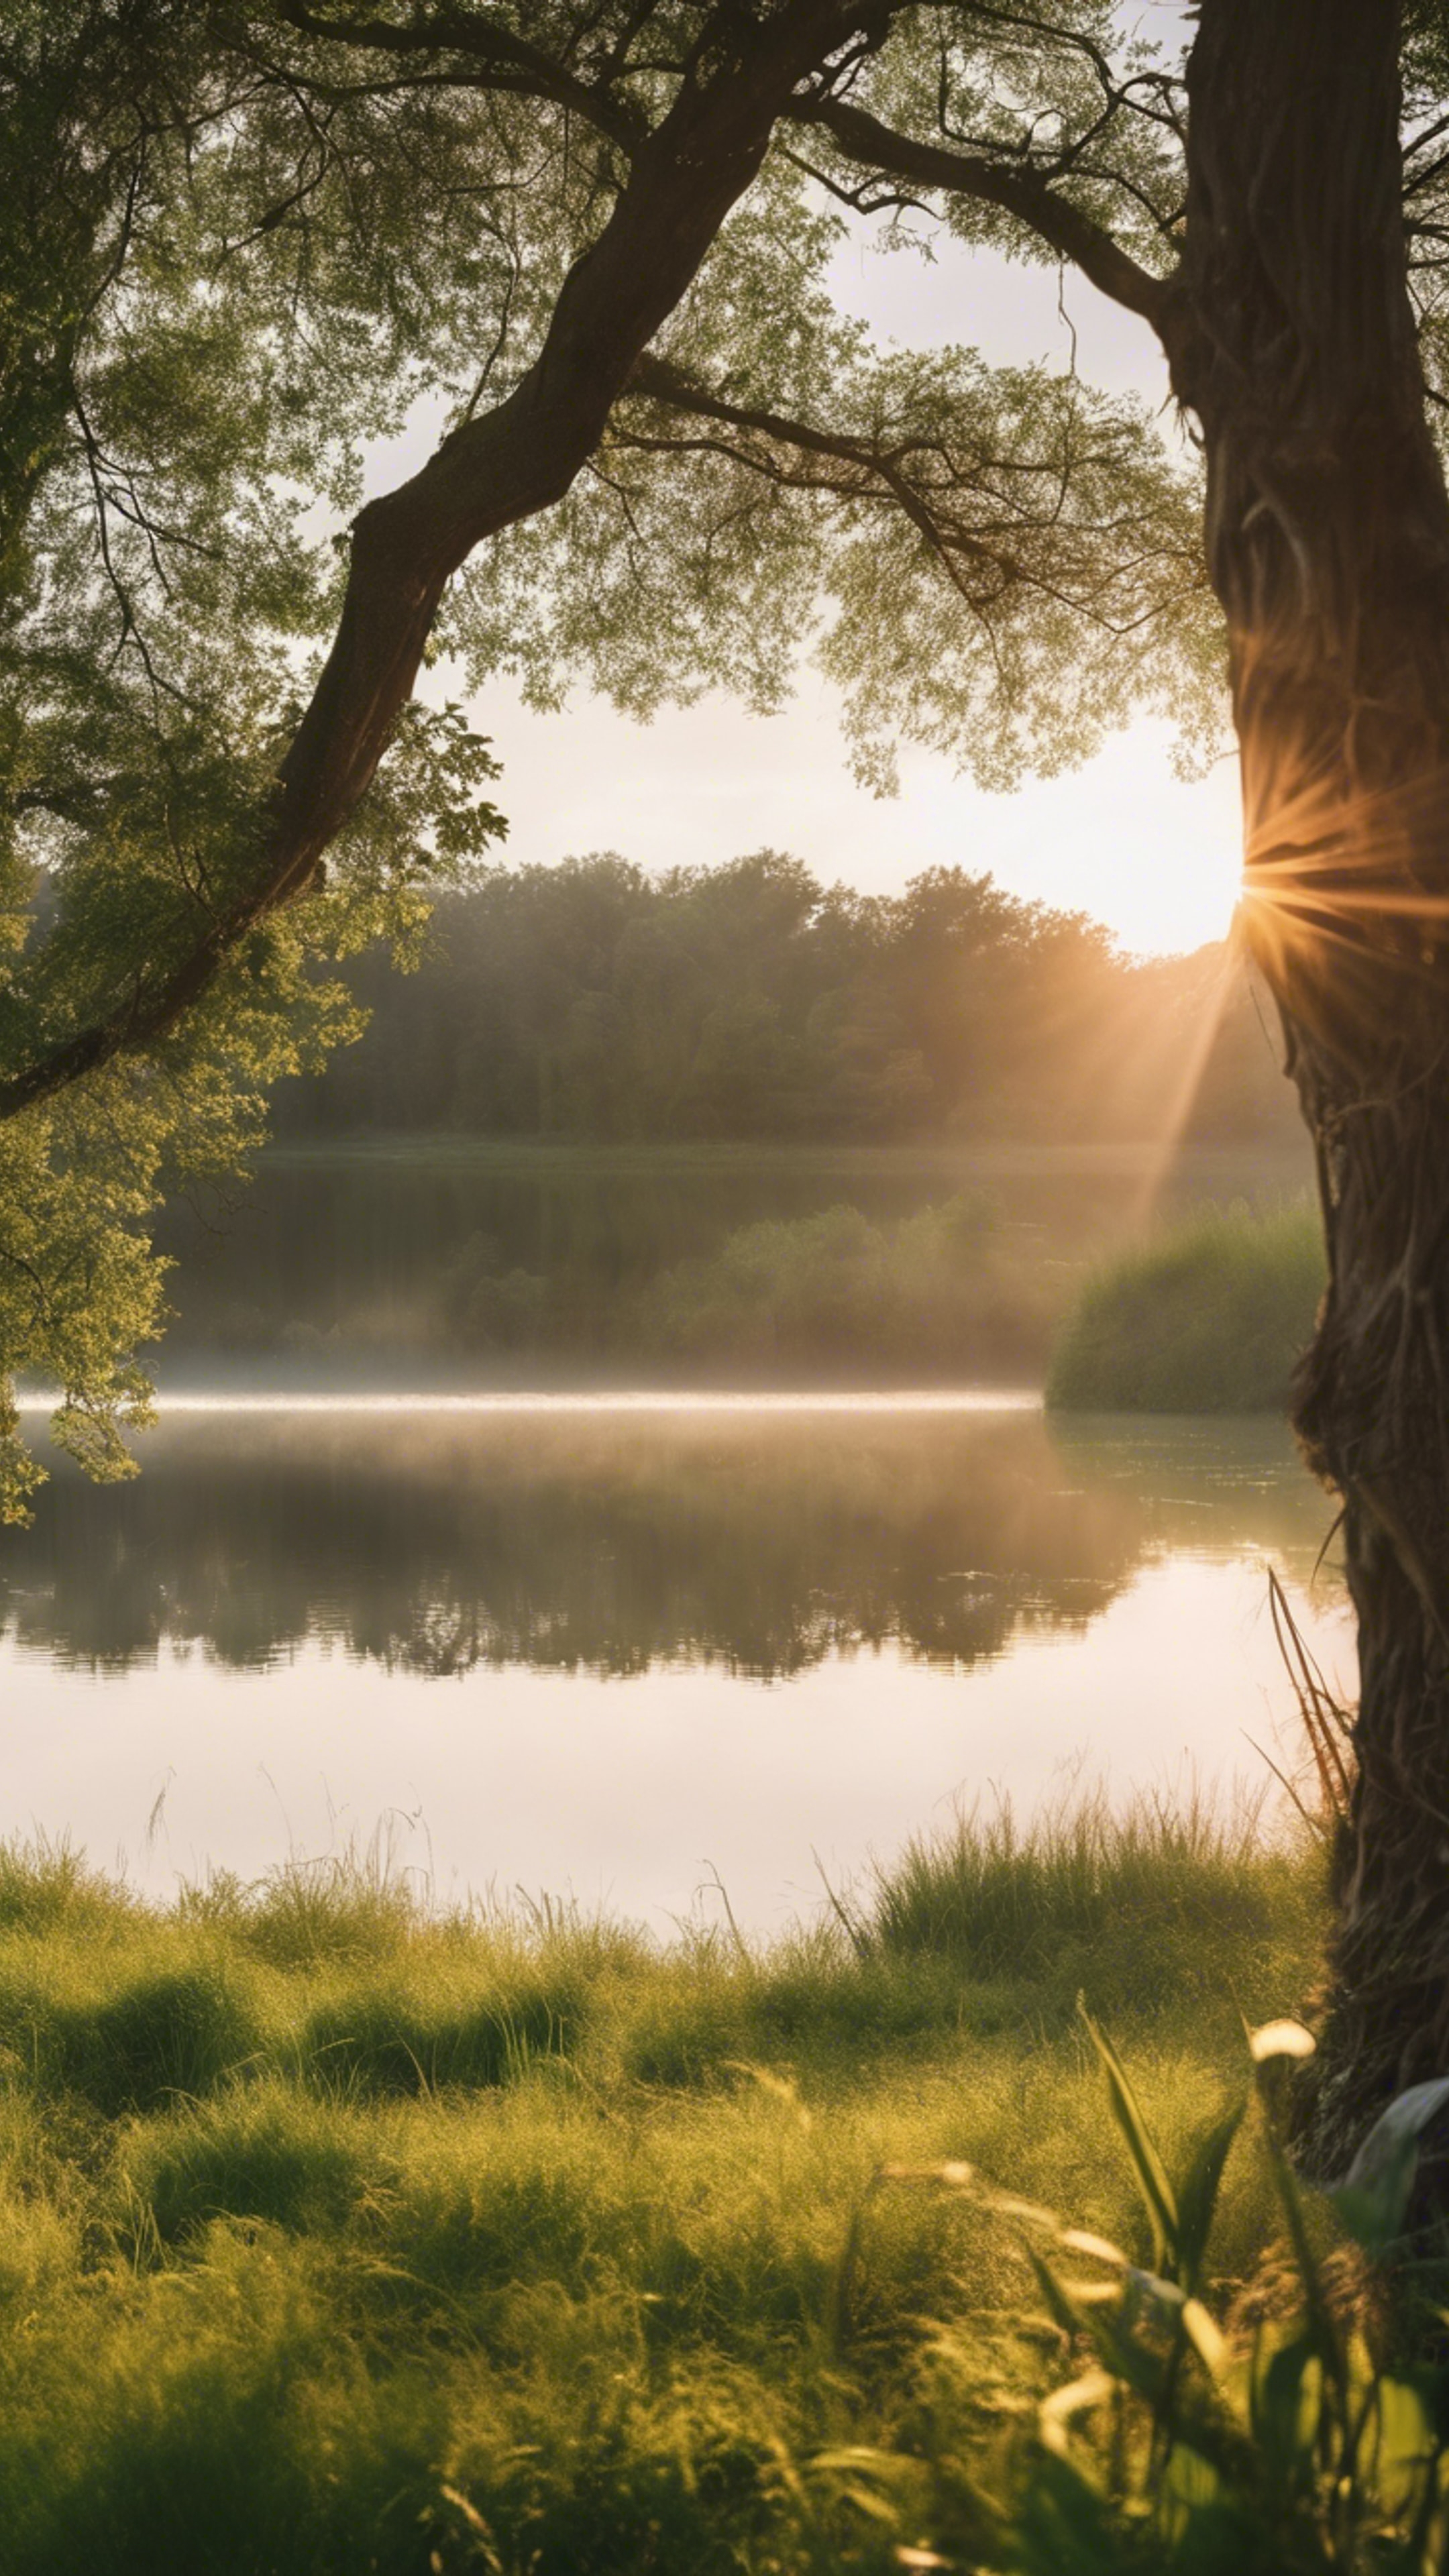 A beautiful sunrise reflecting off a serene lake, enveloped by lush green meadows. duvar kağıdı[3fcd1b5f237347a583b1]